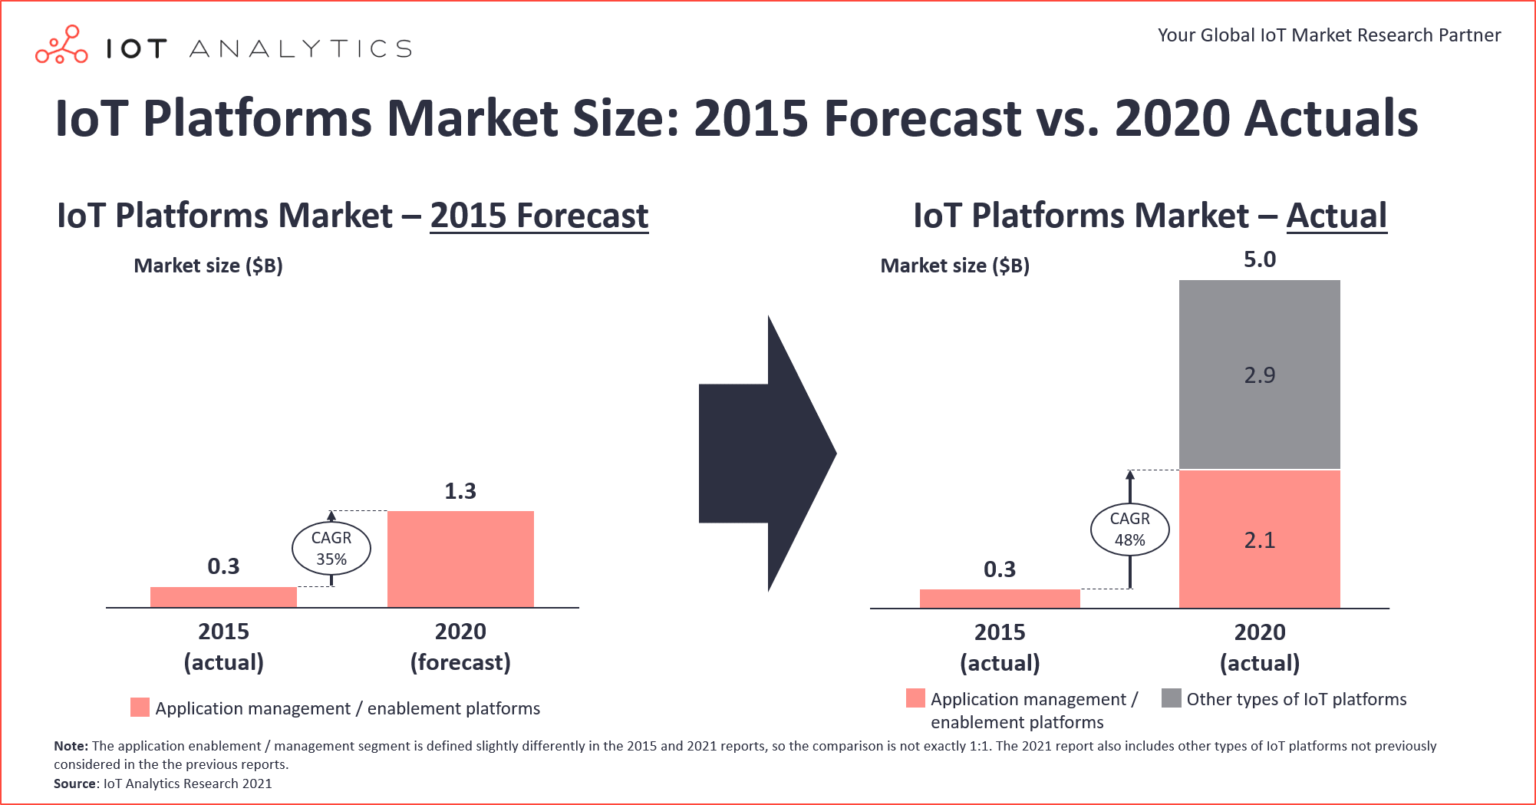 IoT-Platforms-Market-Size-2015-Forecast-vs-2020-Actuals-1536x805.png (210 KB)